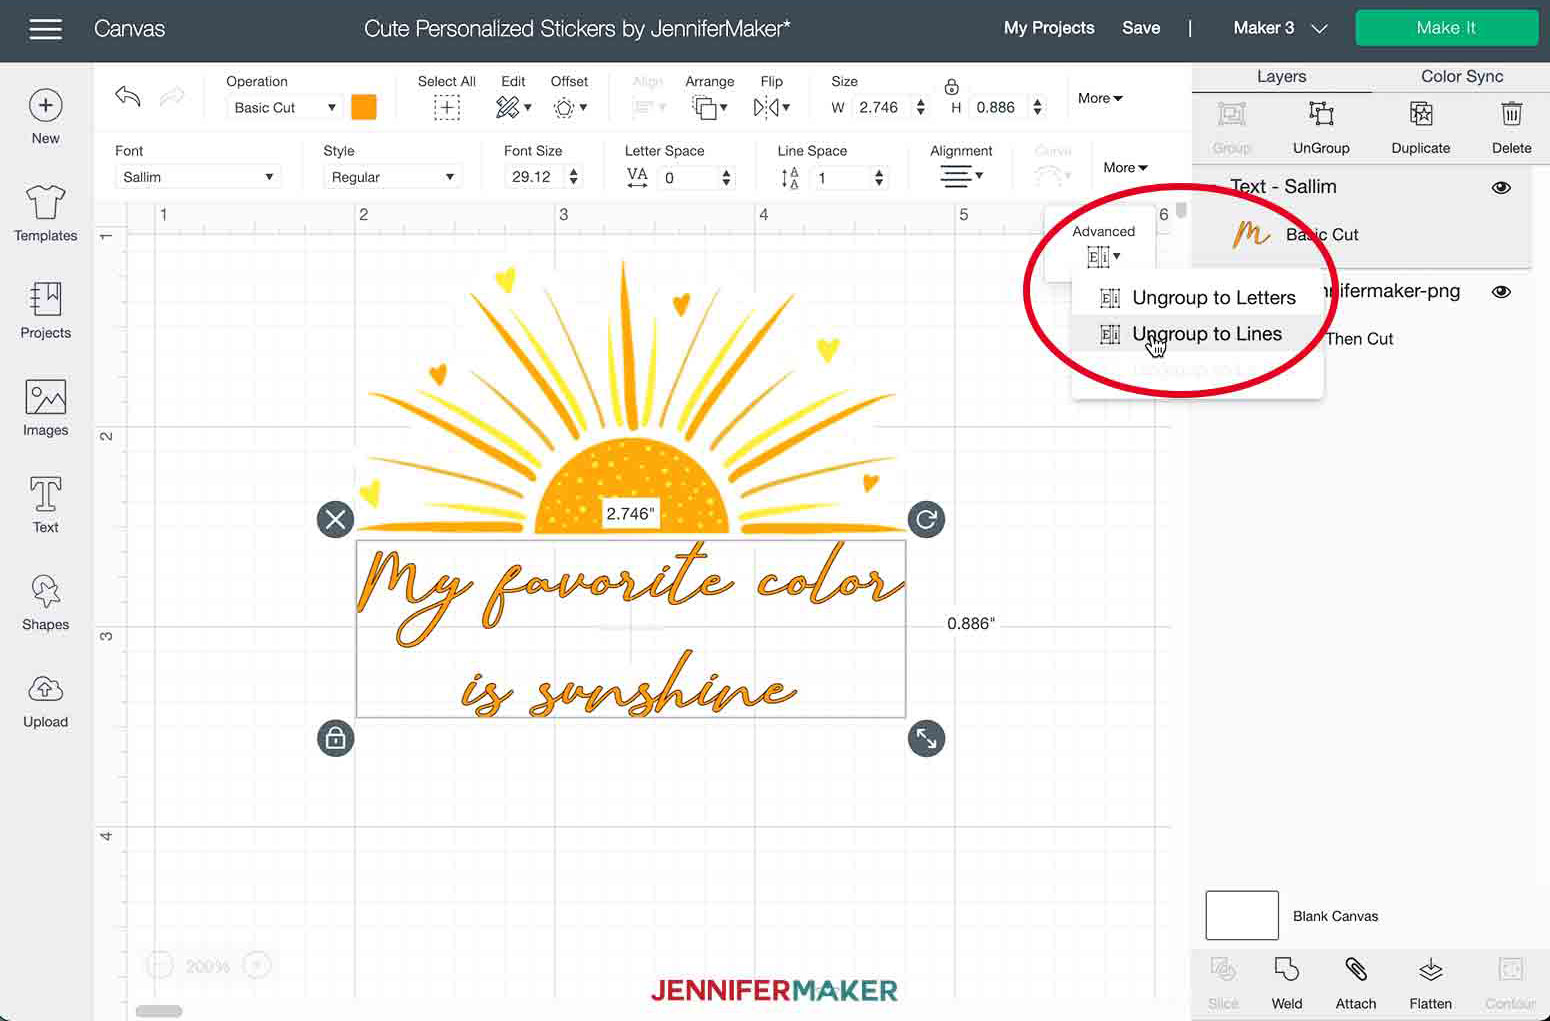 Make Waterproof Stickers with a Sublimation Sticker Sheet - Jennifer Maker